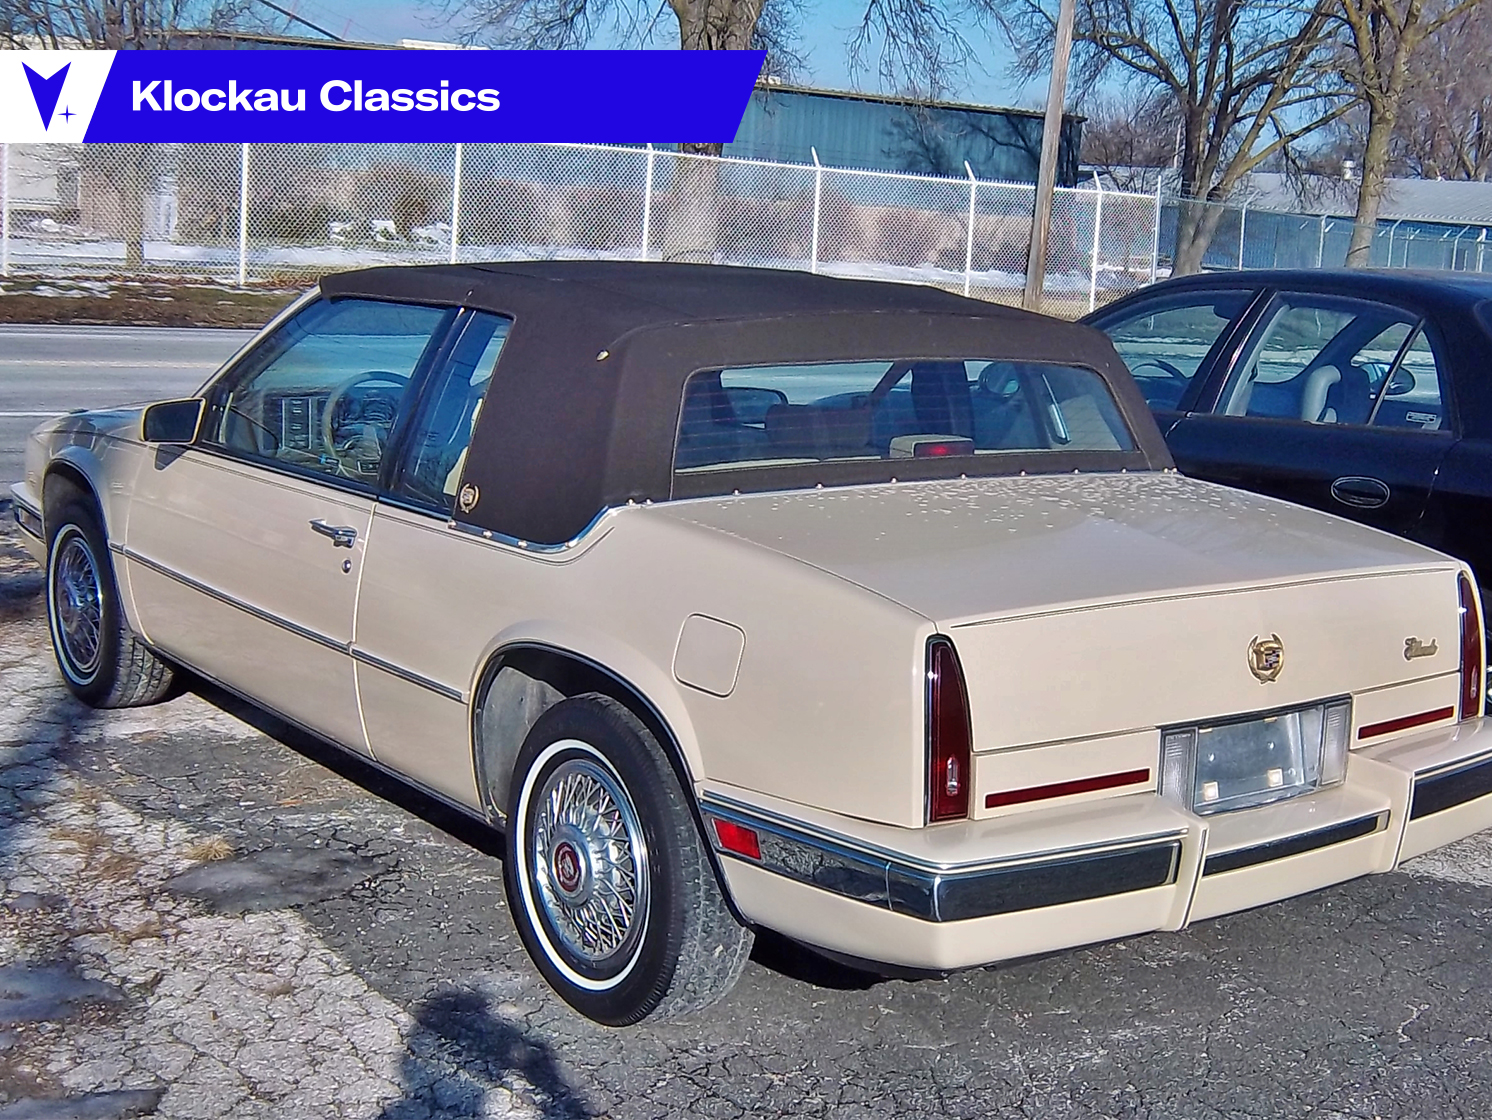 1986 Cadillac Eldorado: There was shrinkage! - Hagerty Media